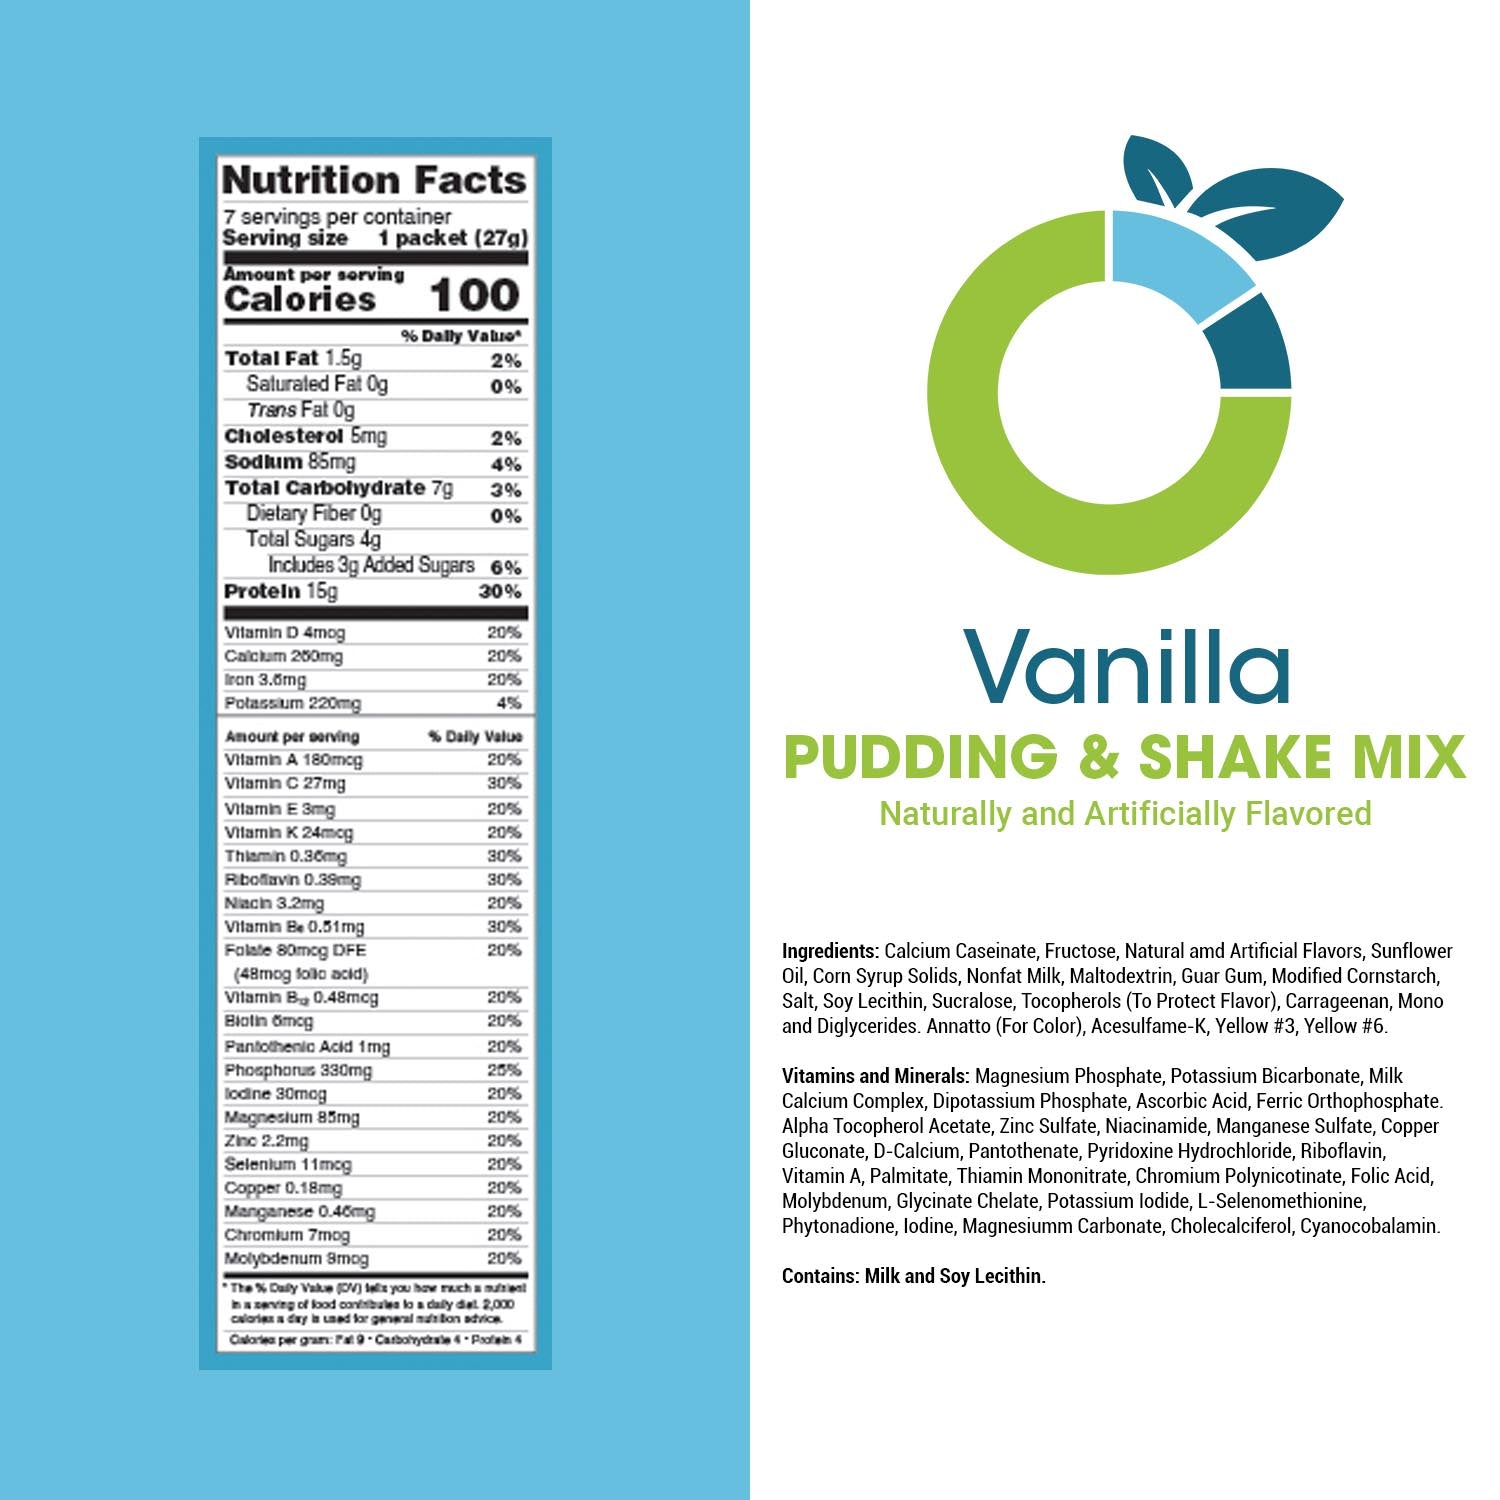 Vanilla Pudding & Shake mix